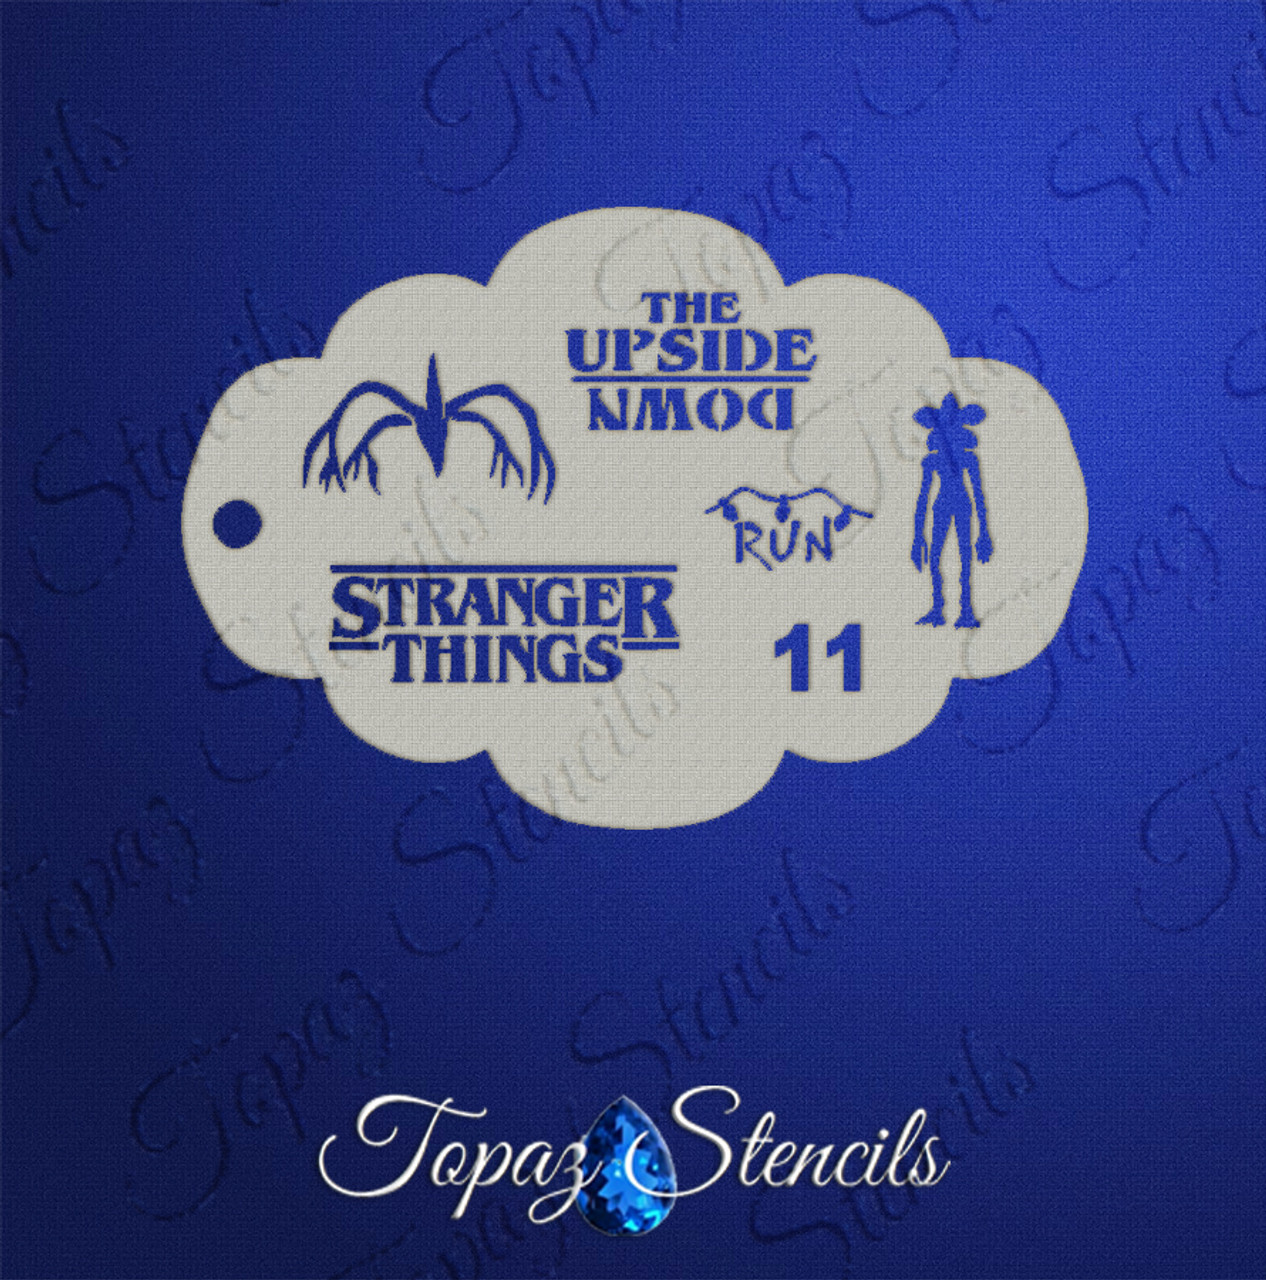 Stranger Things Elements - Topaz Stencils